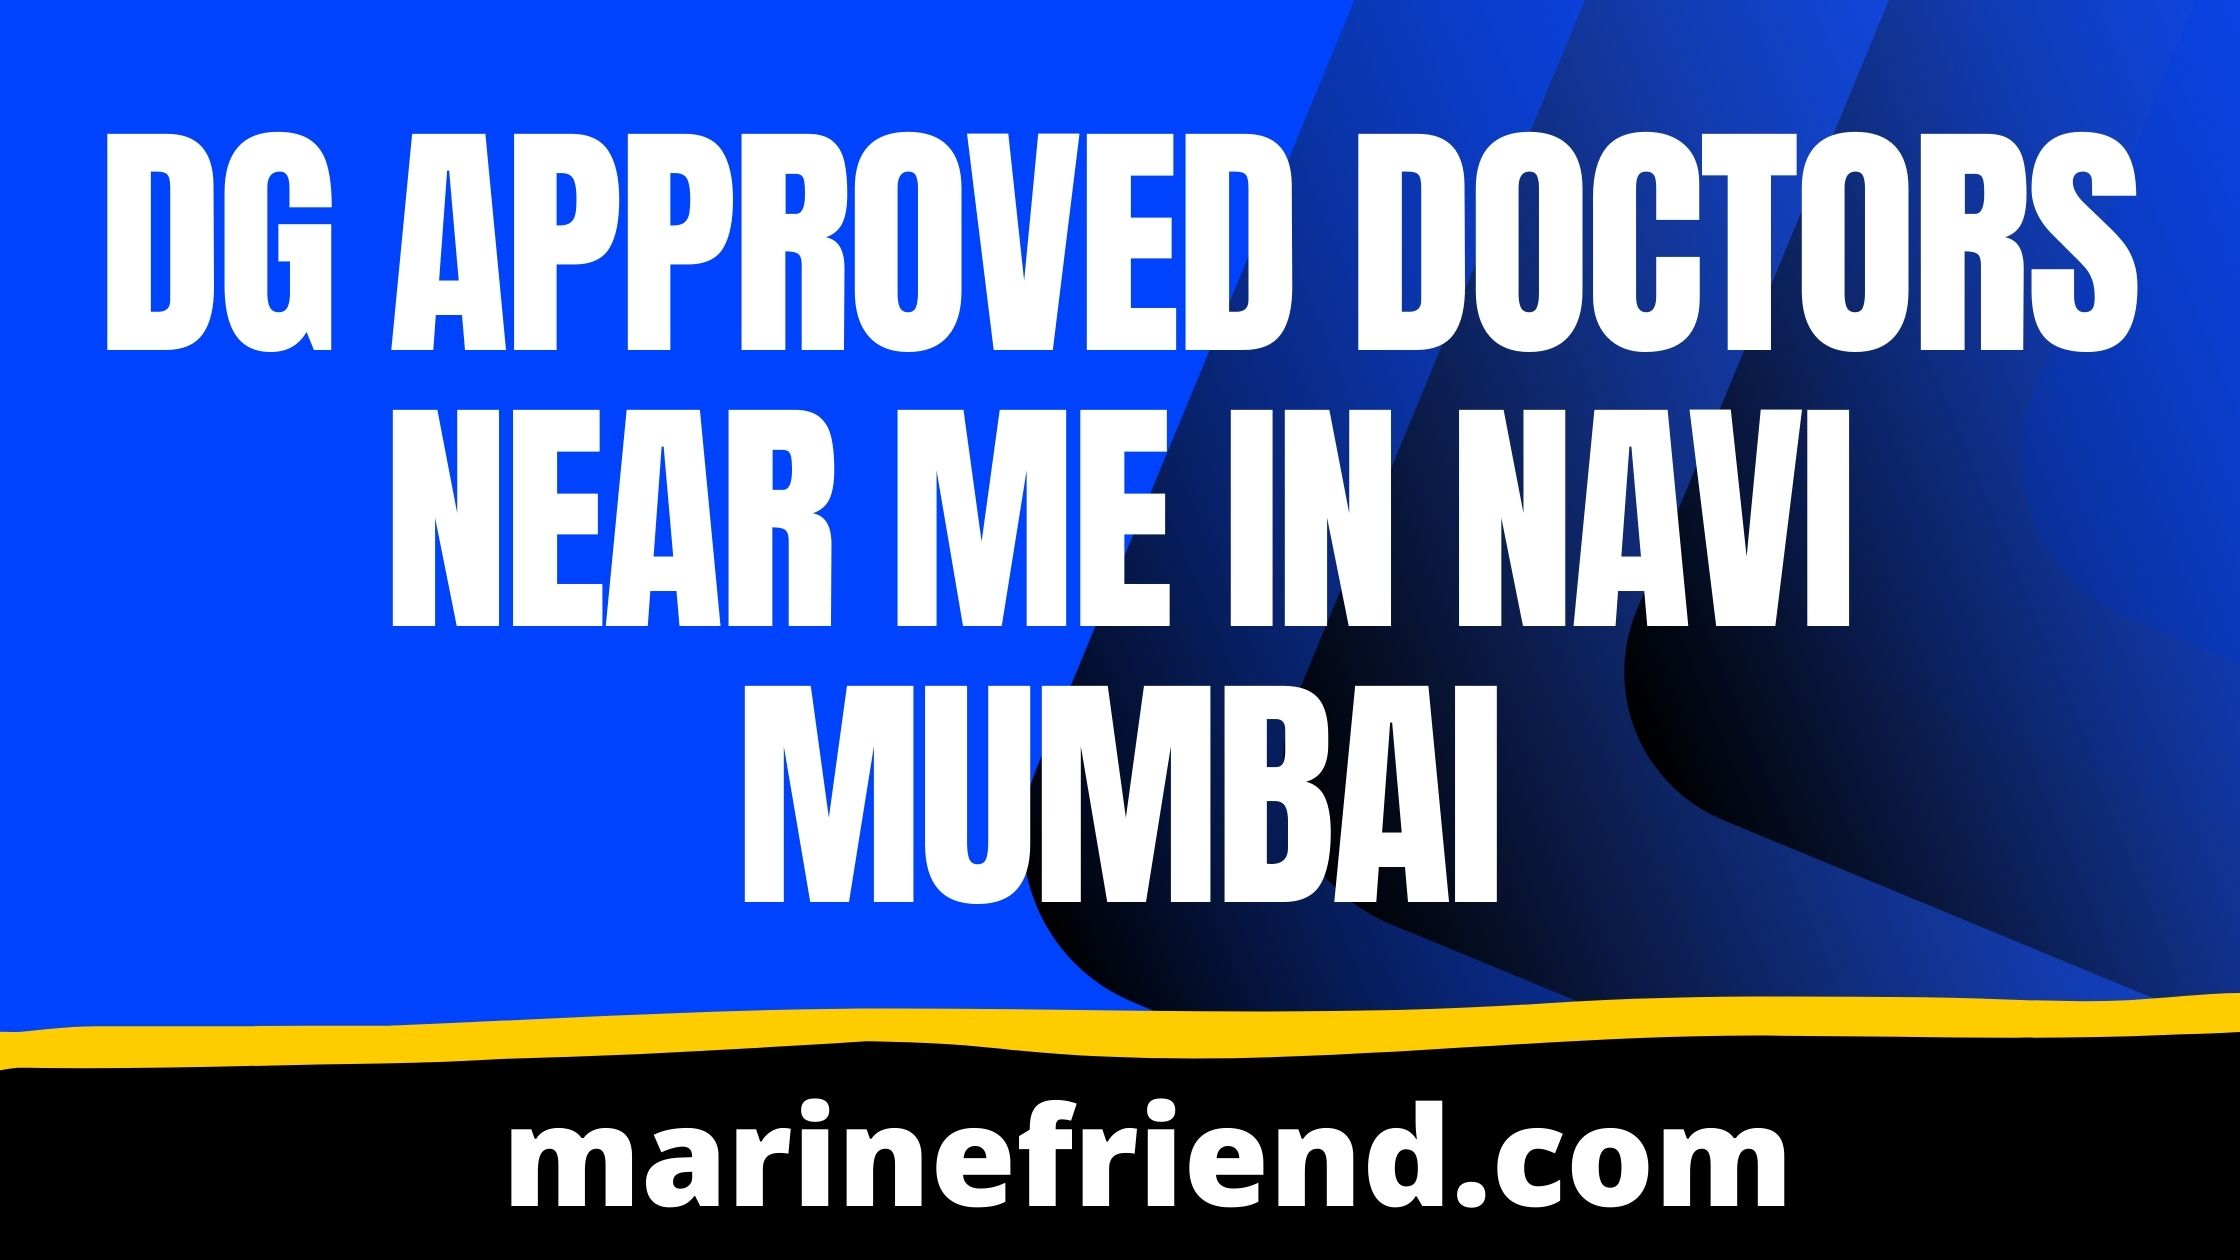 dg approved doctors near me in NAVI MUMBAI